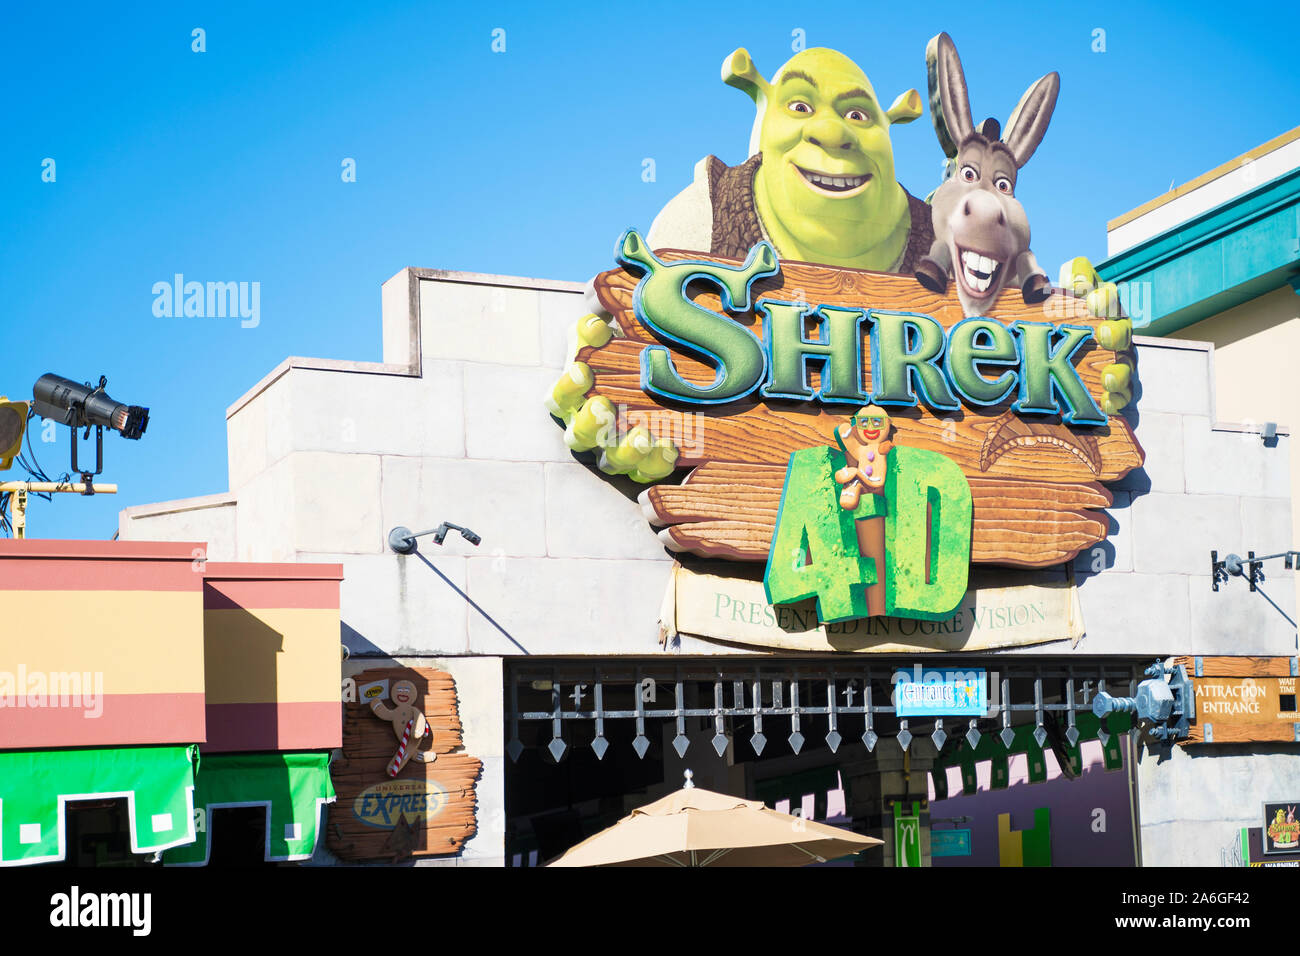 Shrek 4d Ride Universal Studios Orlando Florida Usa Stock